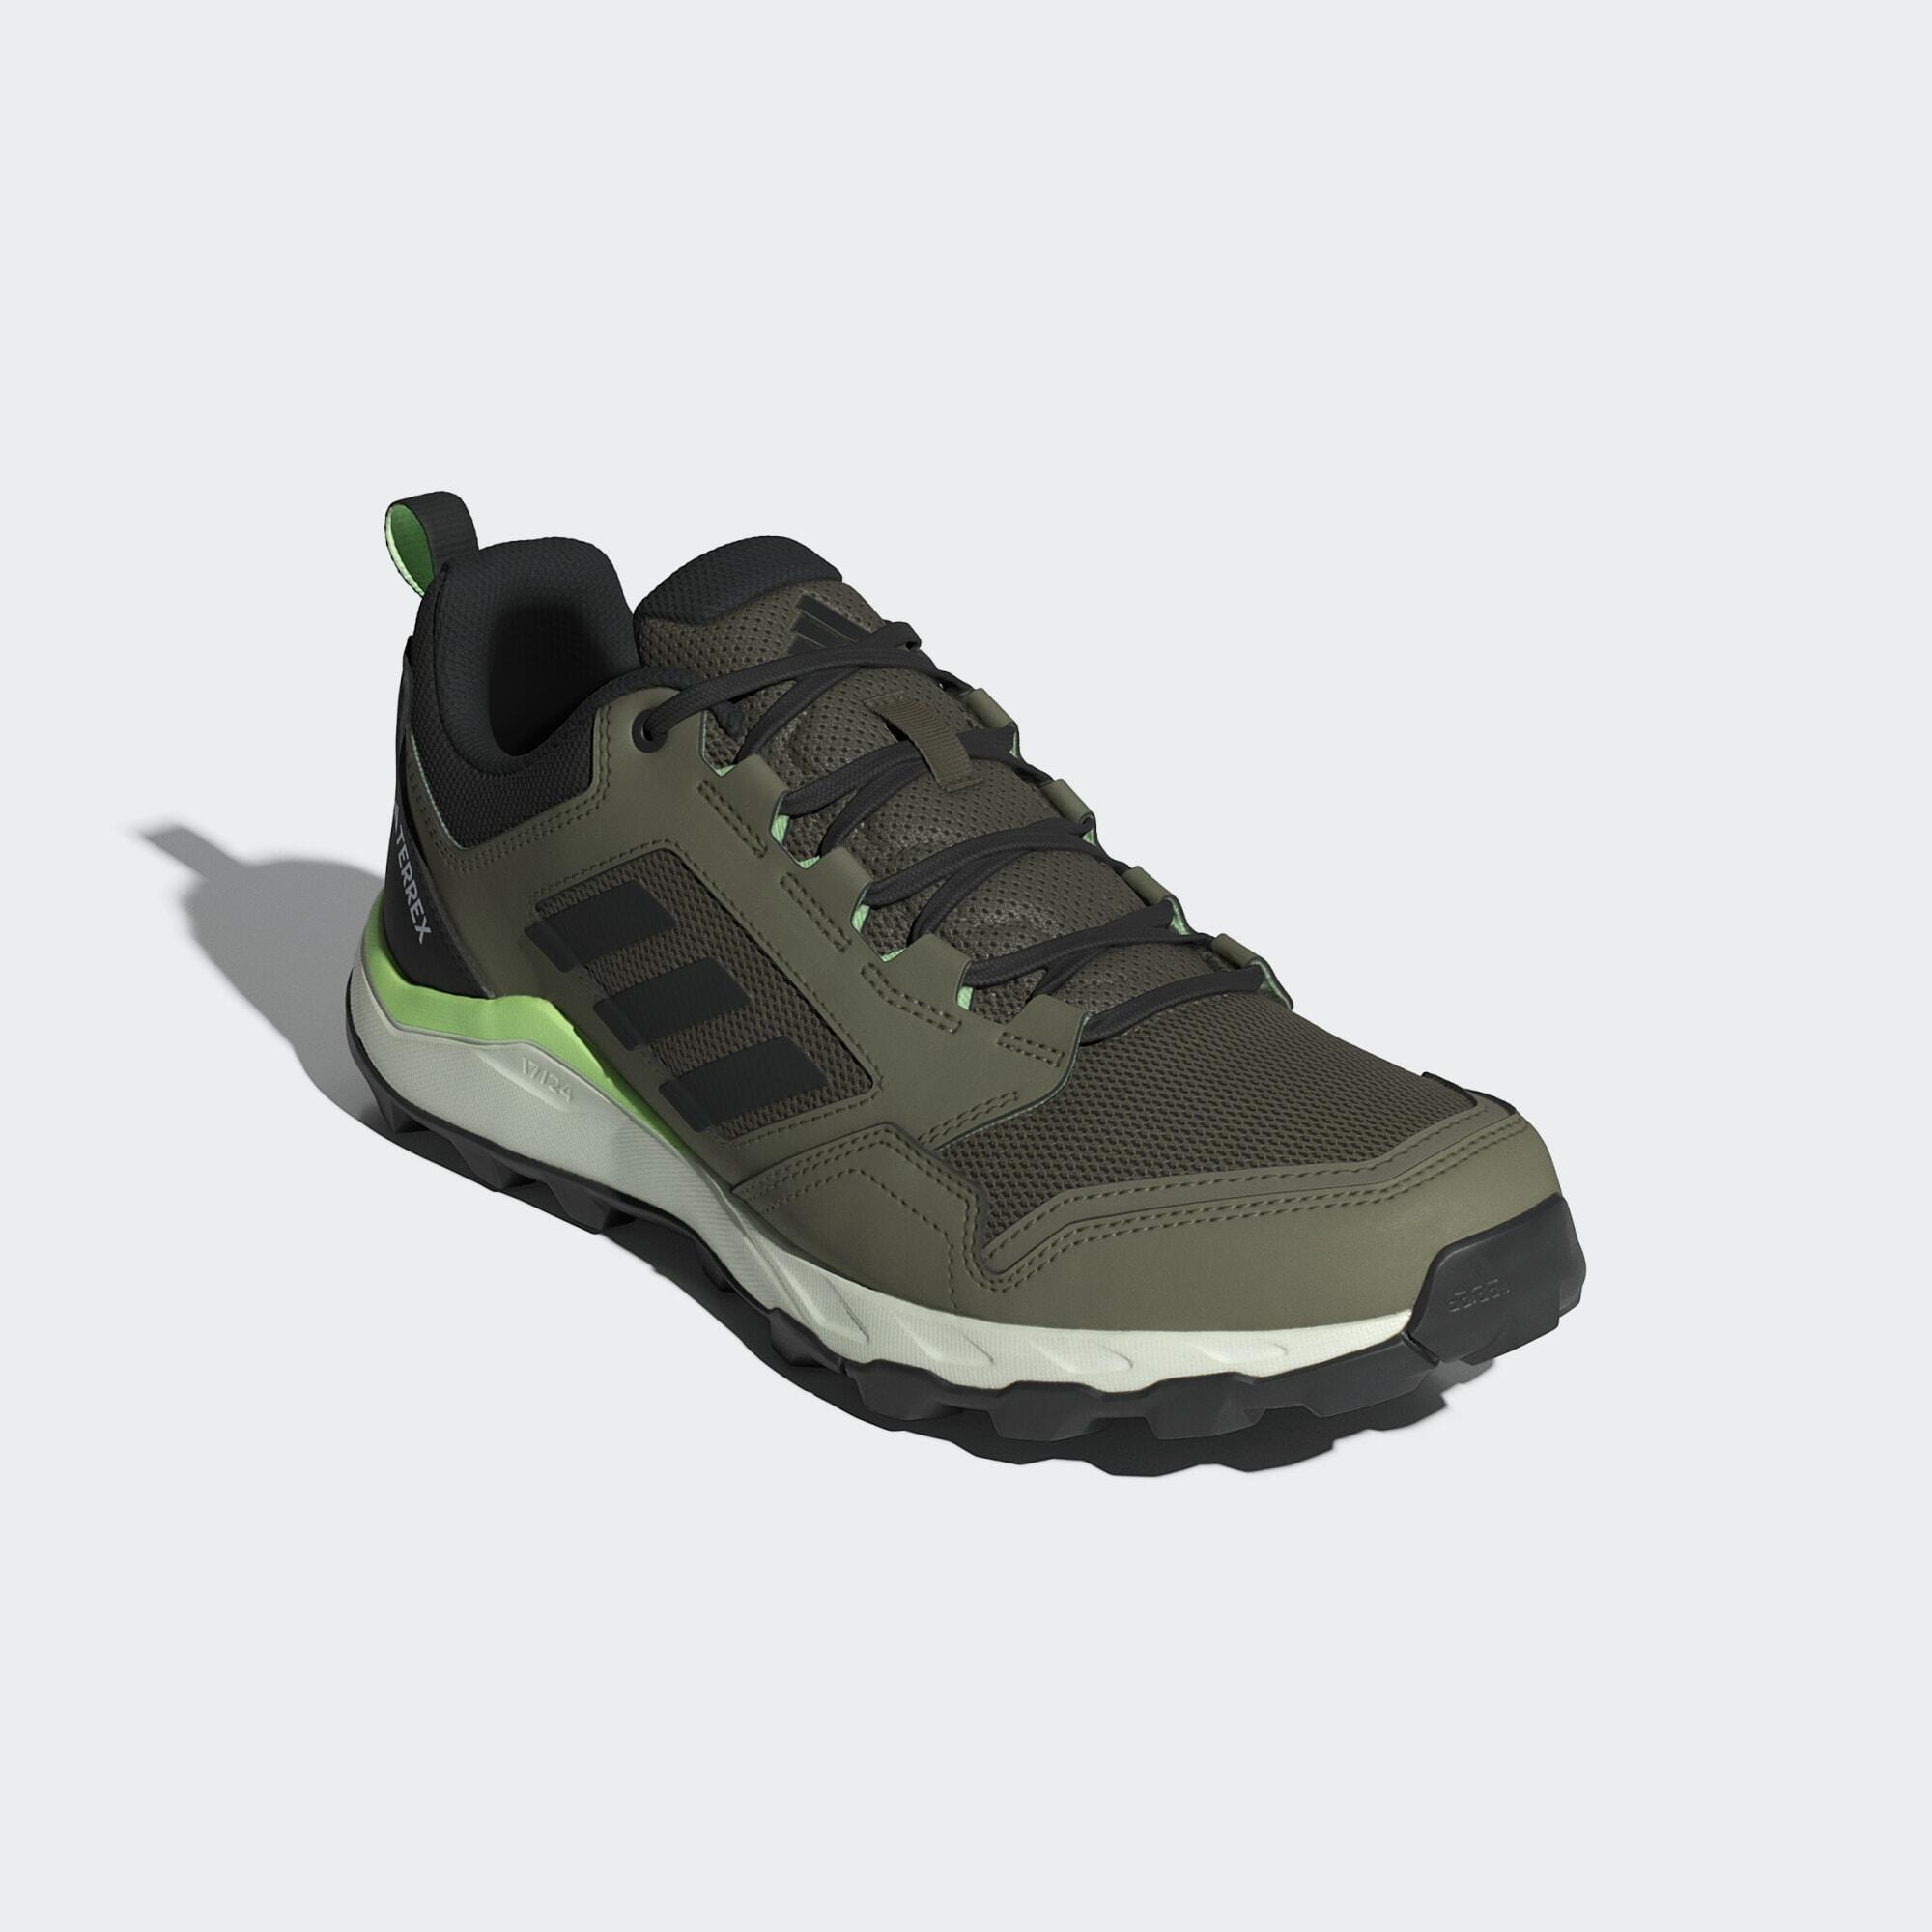 Tracerocker 2.0 Trail Running Shoes 5/7